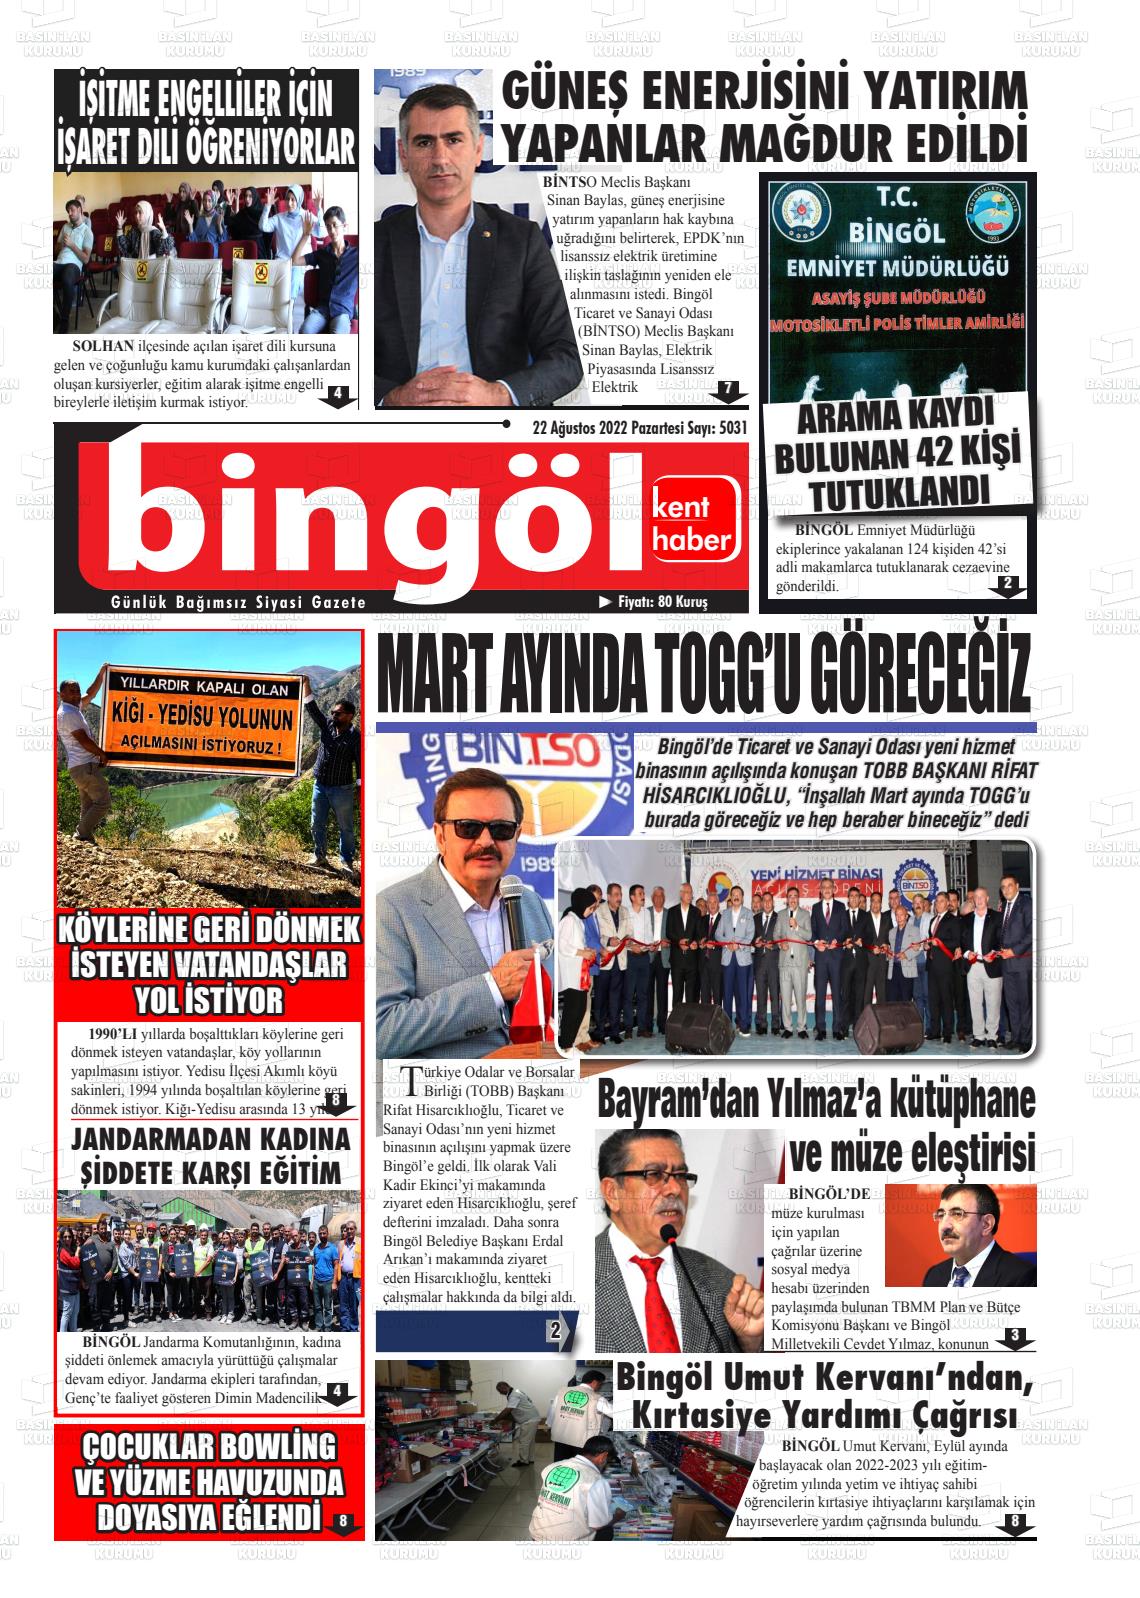 22 Ağustos 2022 Bingöl Kent Haber Gazete Manşeti